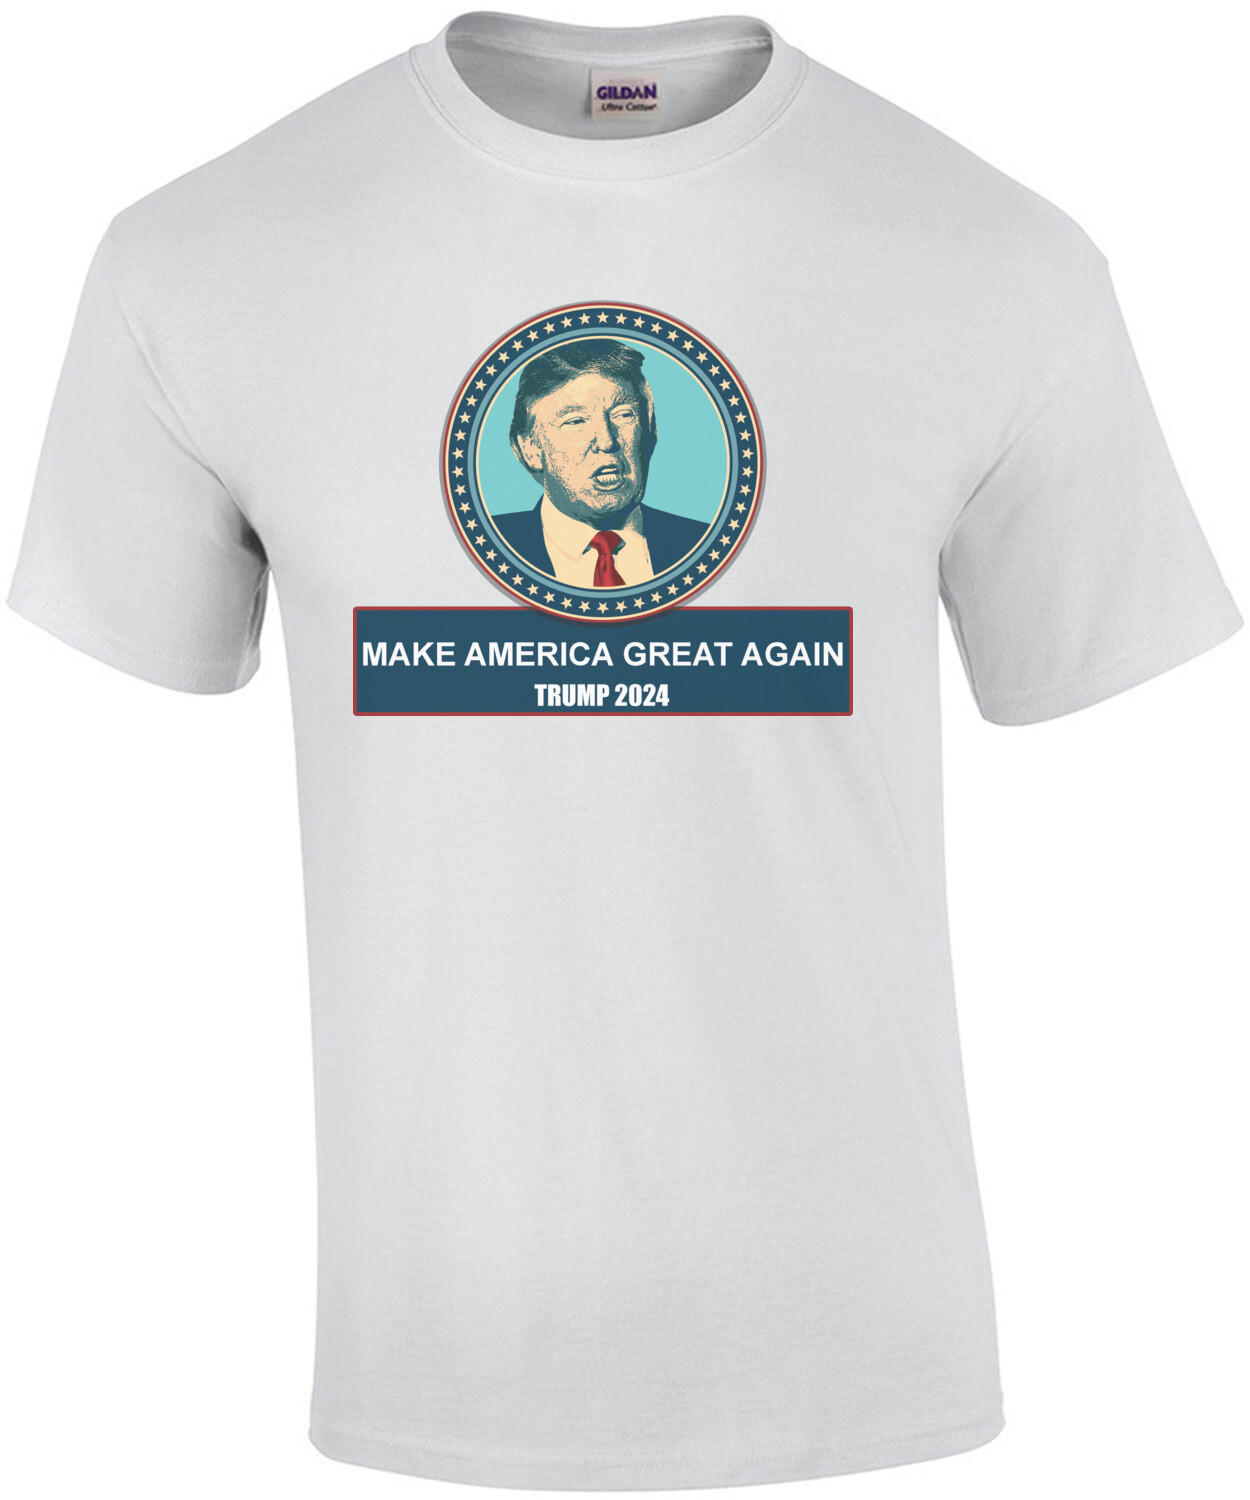 Make America Great Again - Trump 2024 - Pro Trump 2024 Election T-Shirt